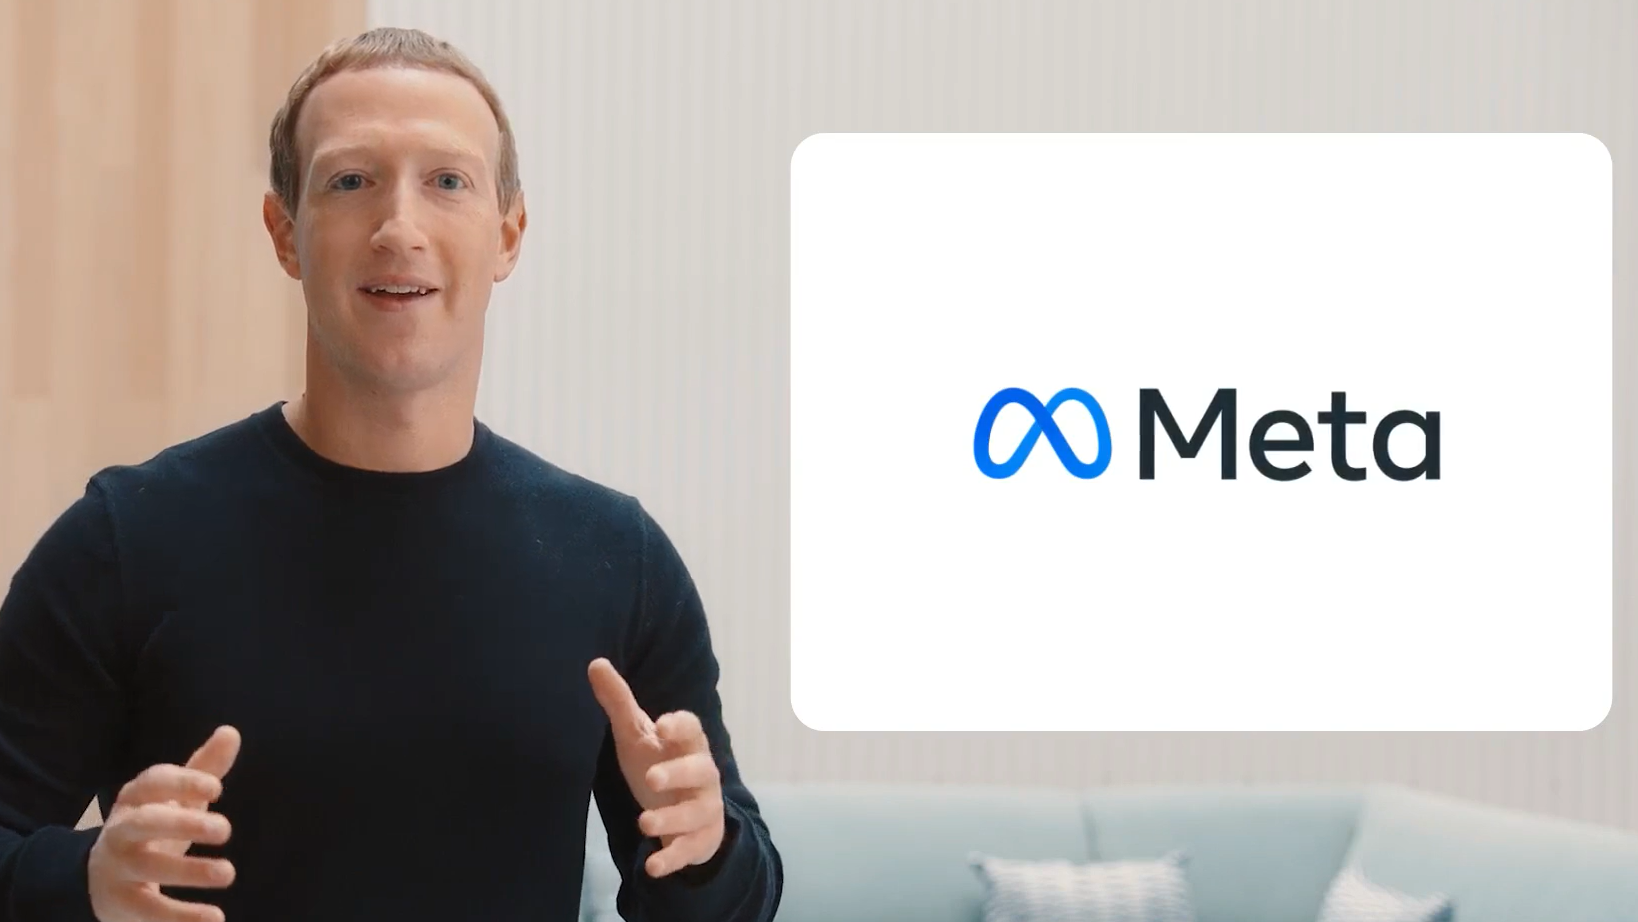 Mark-Zuckerberg-Meta-Facebook-Connect-2021.png